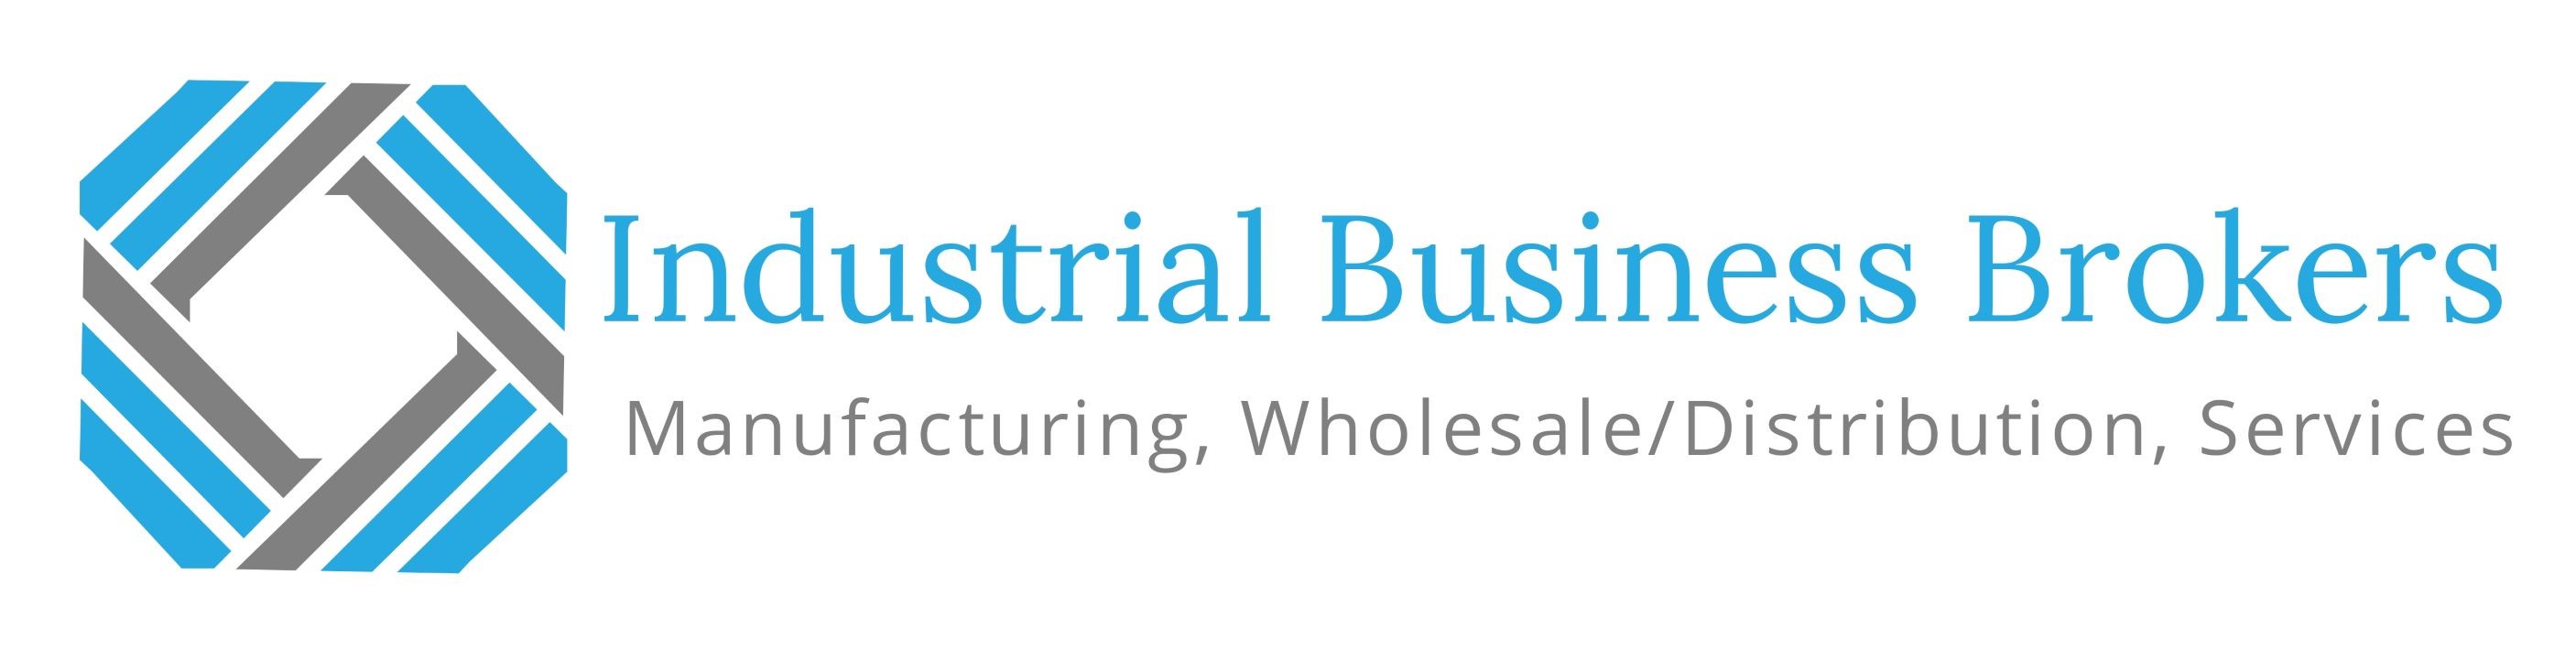 Industrial Business Brokers Logo